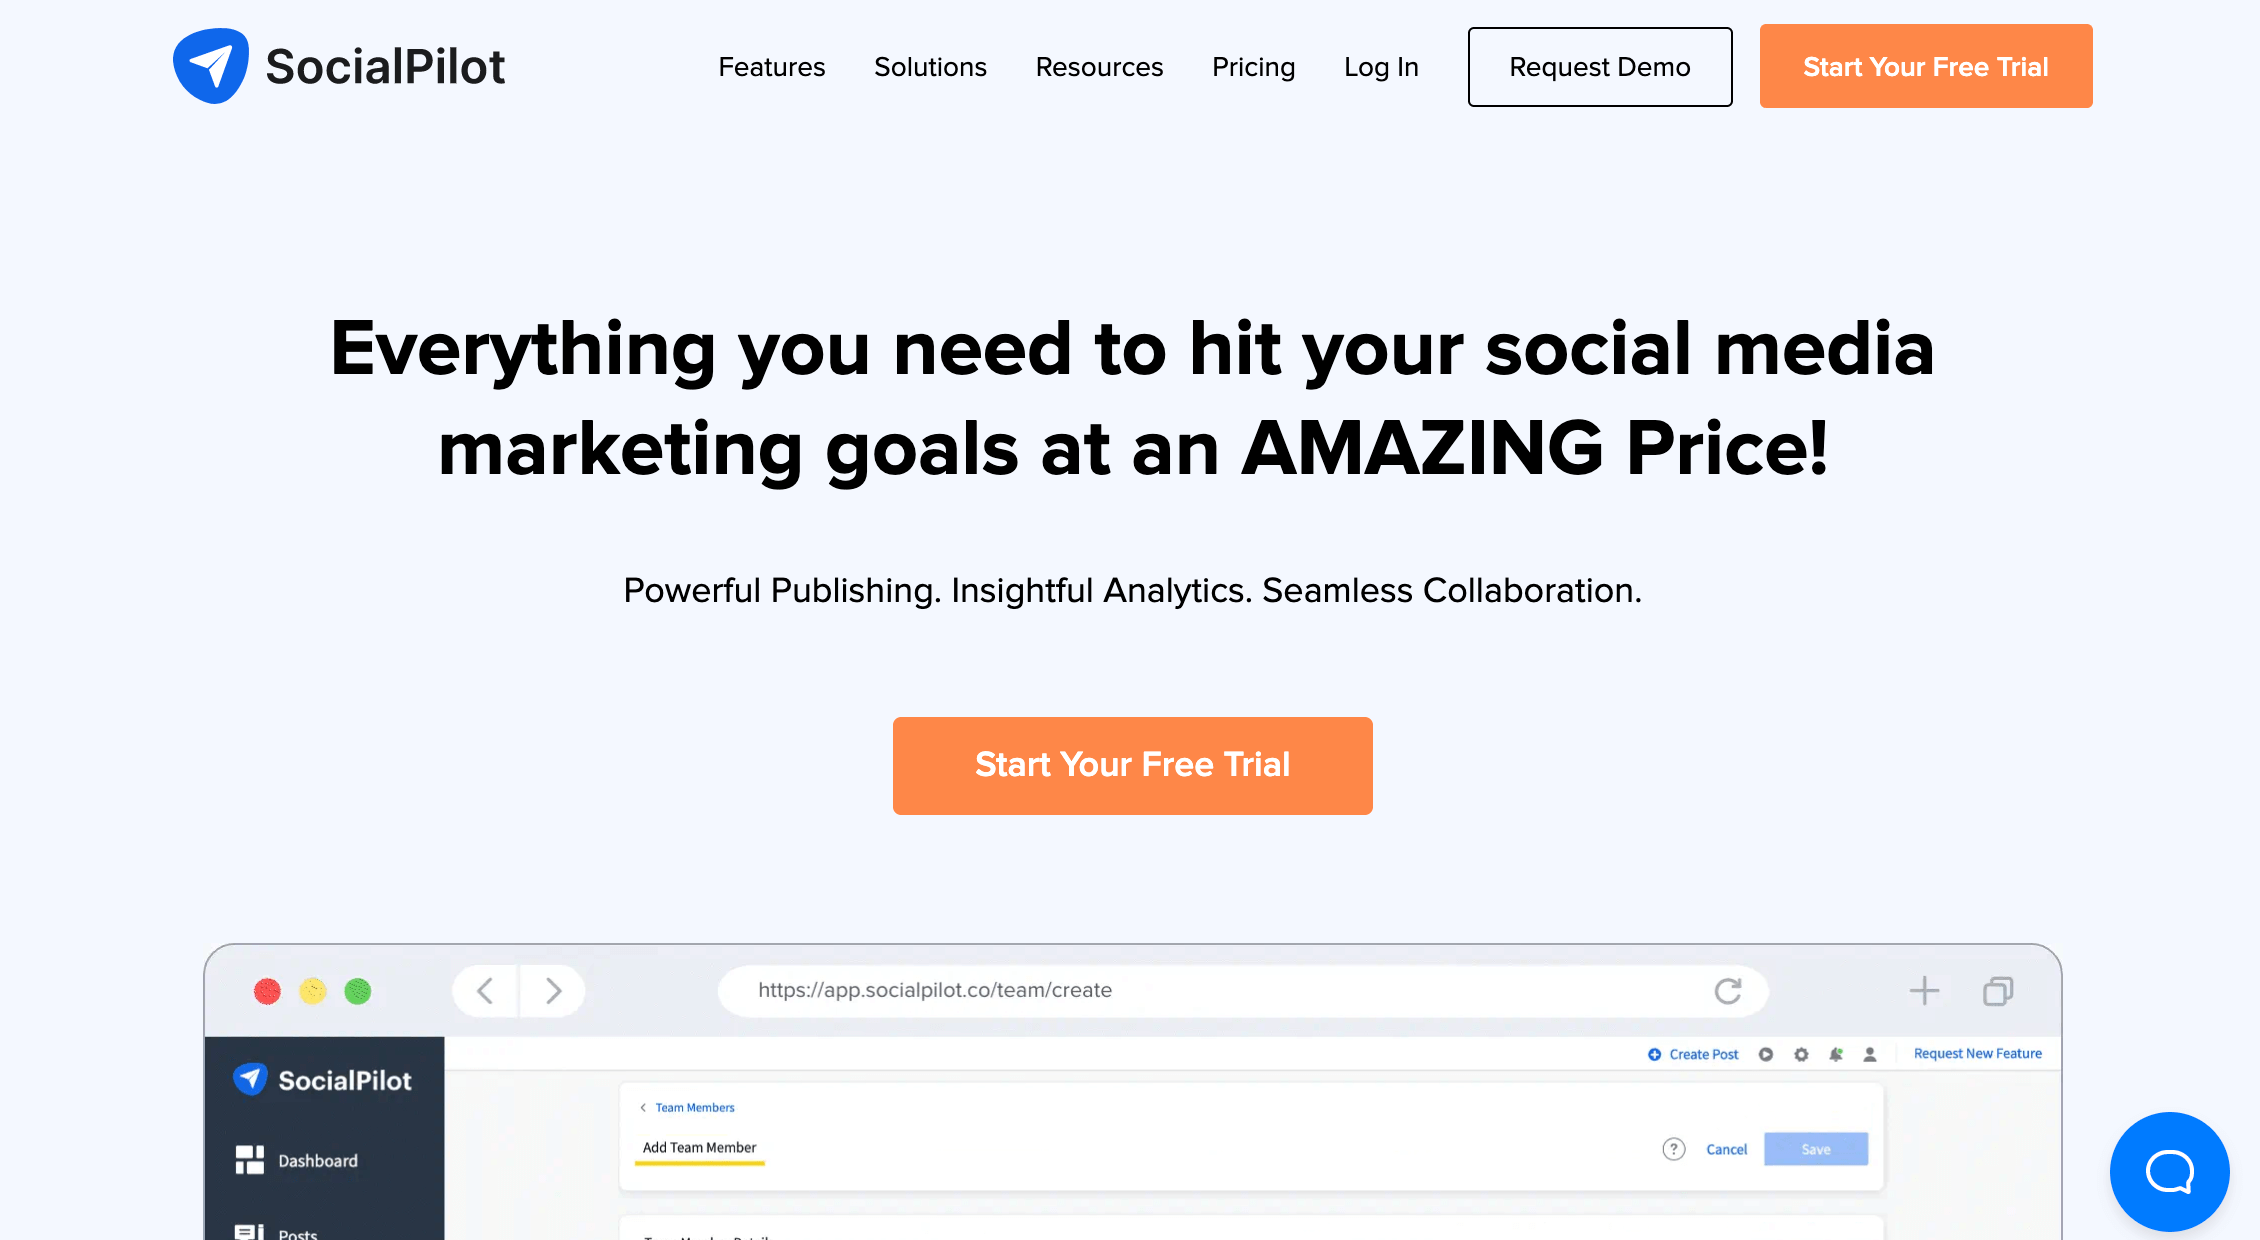 SocialPilot's homepage